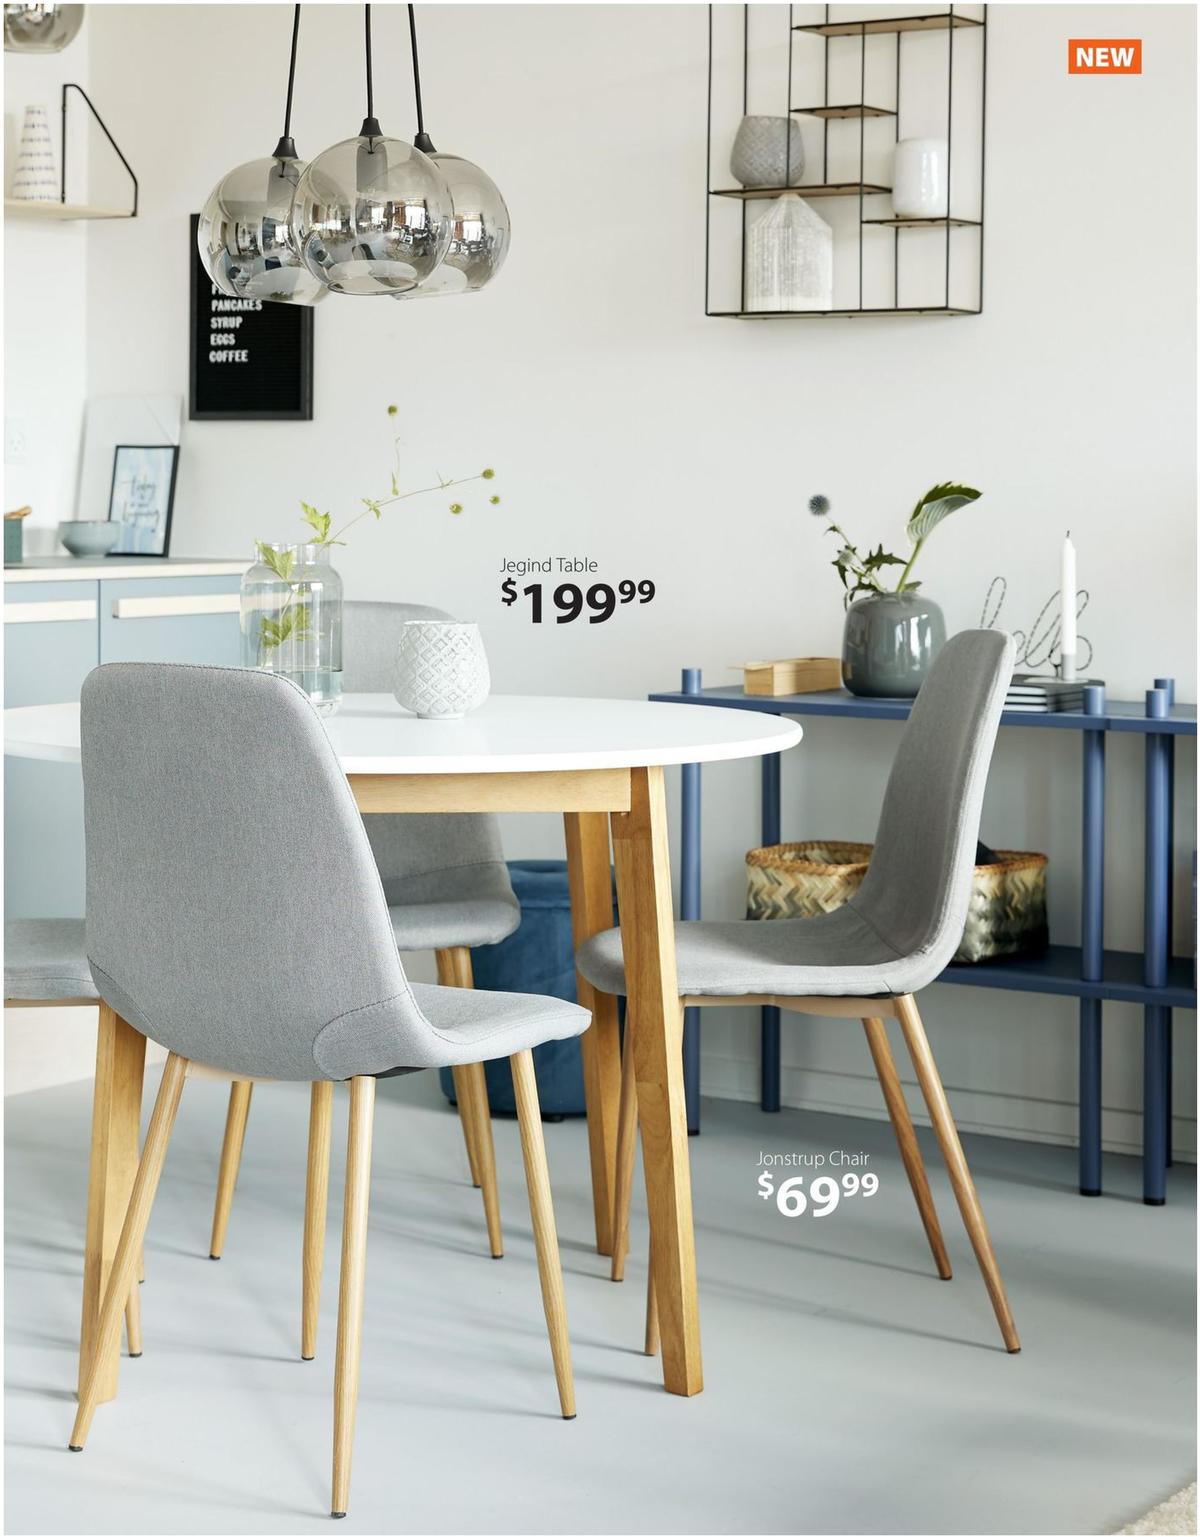 JYSK Furniture Catalogue Flyer from November 14